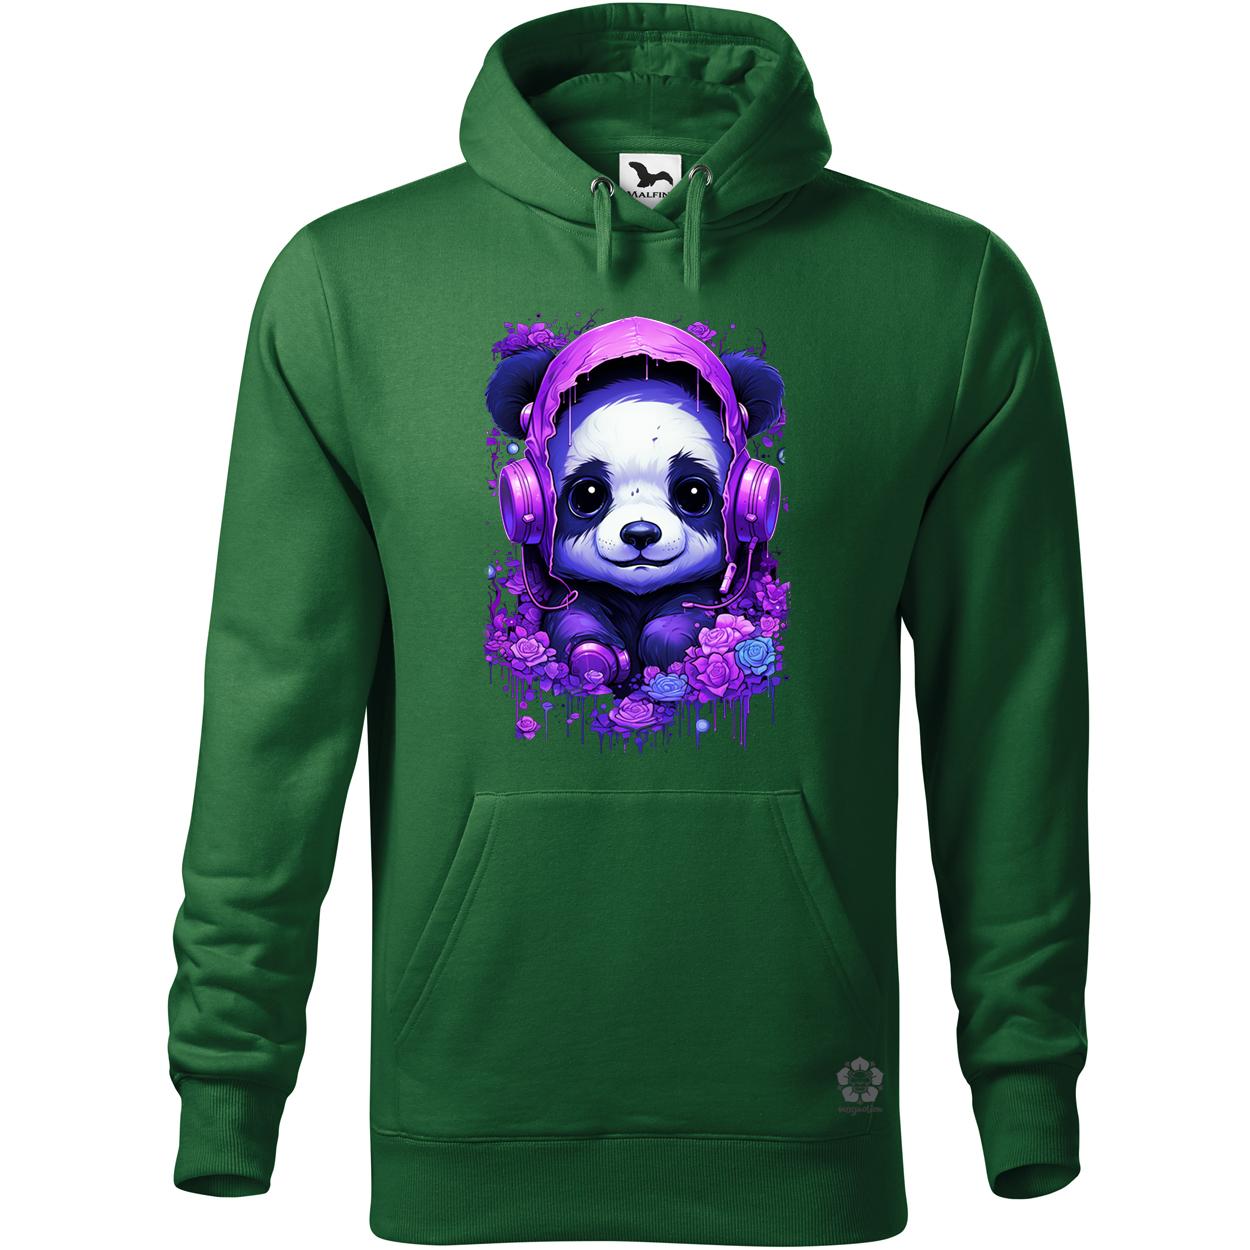 Glitchart panda v2